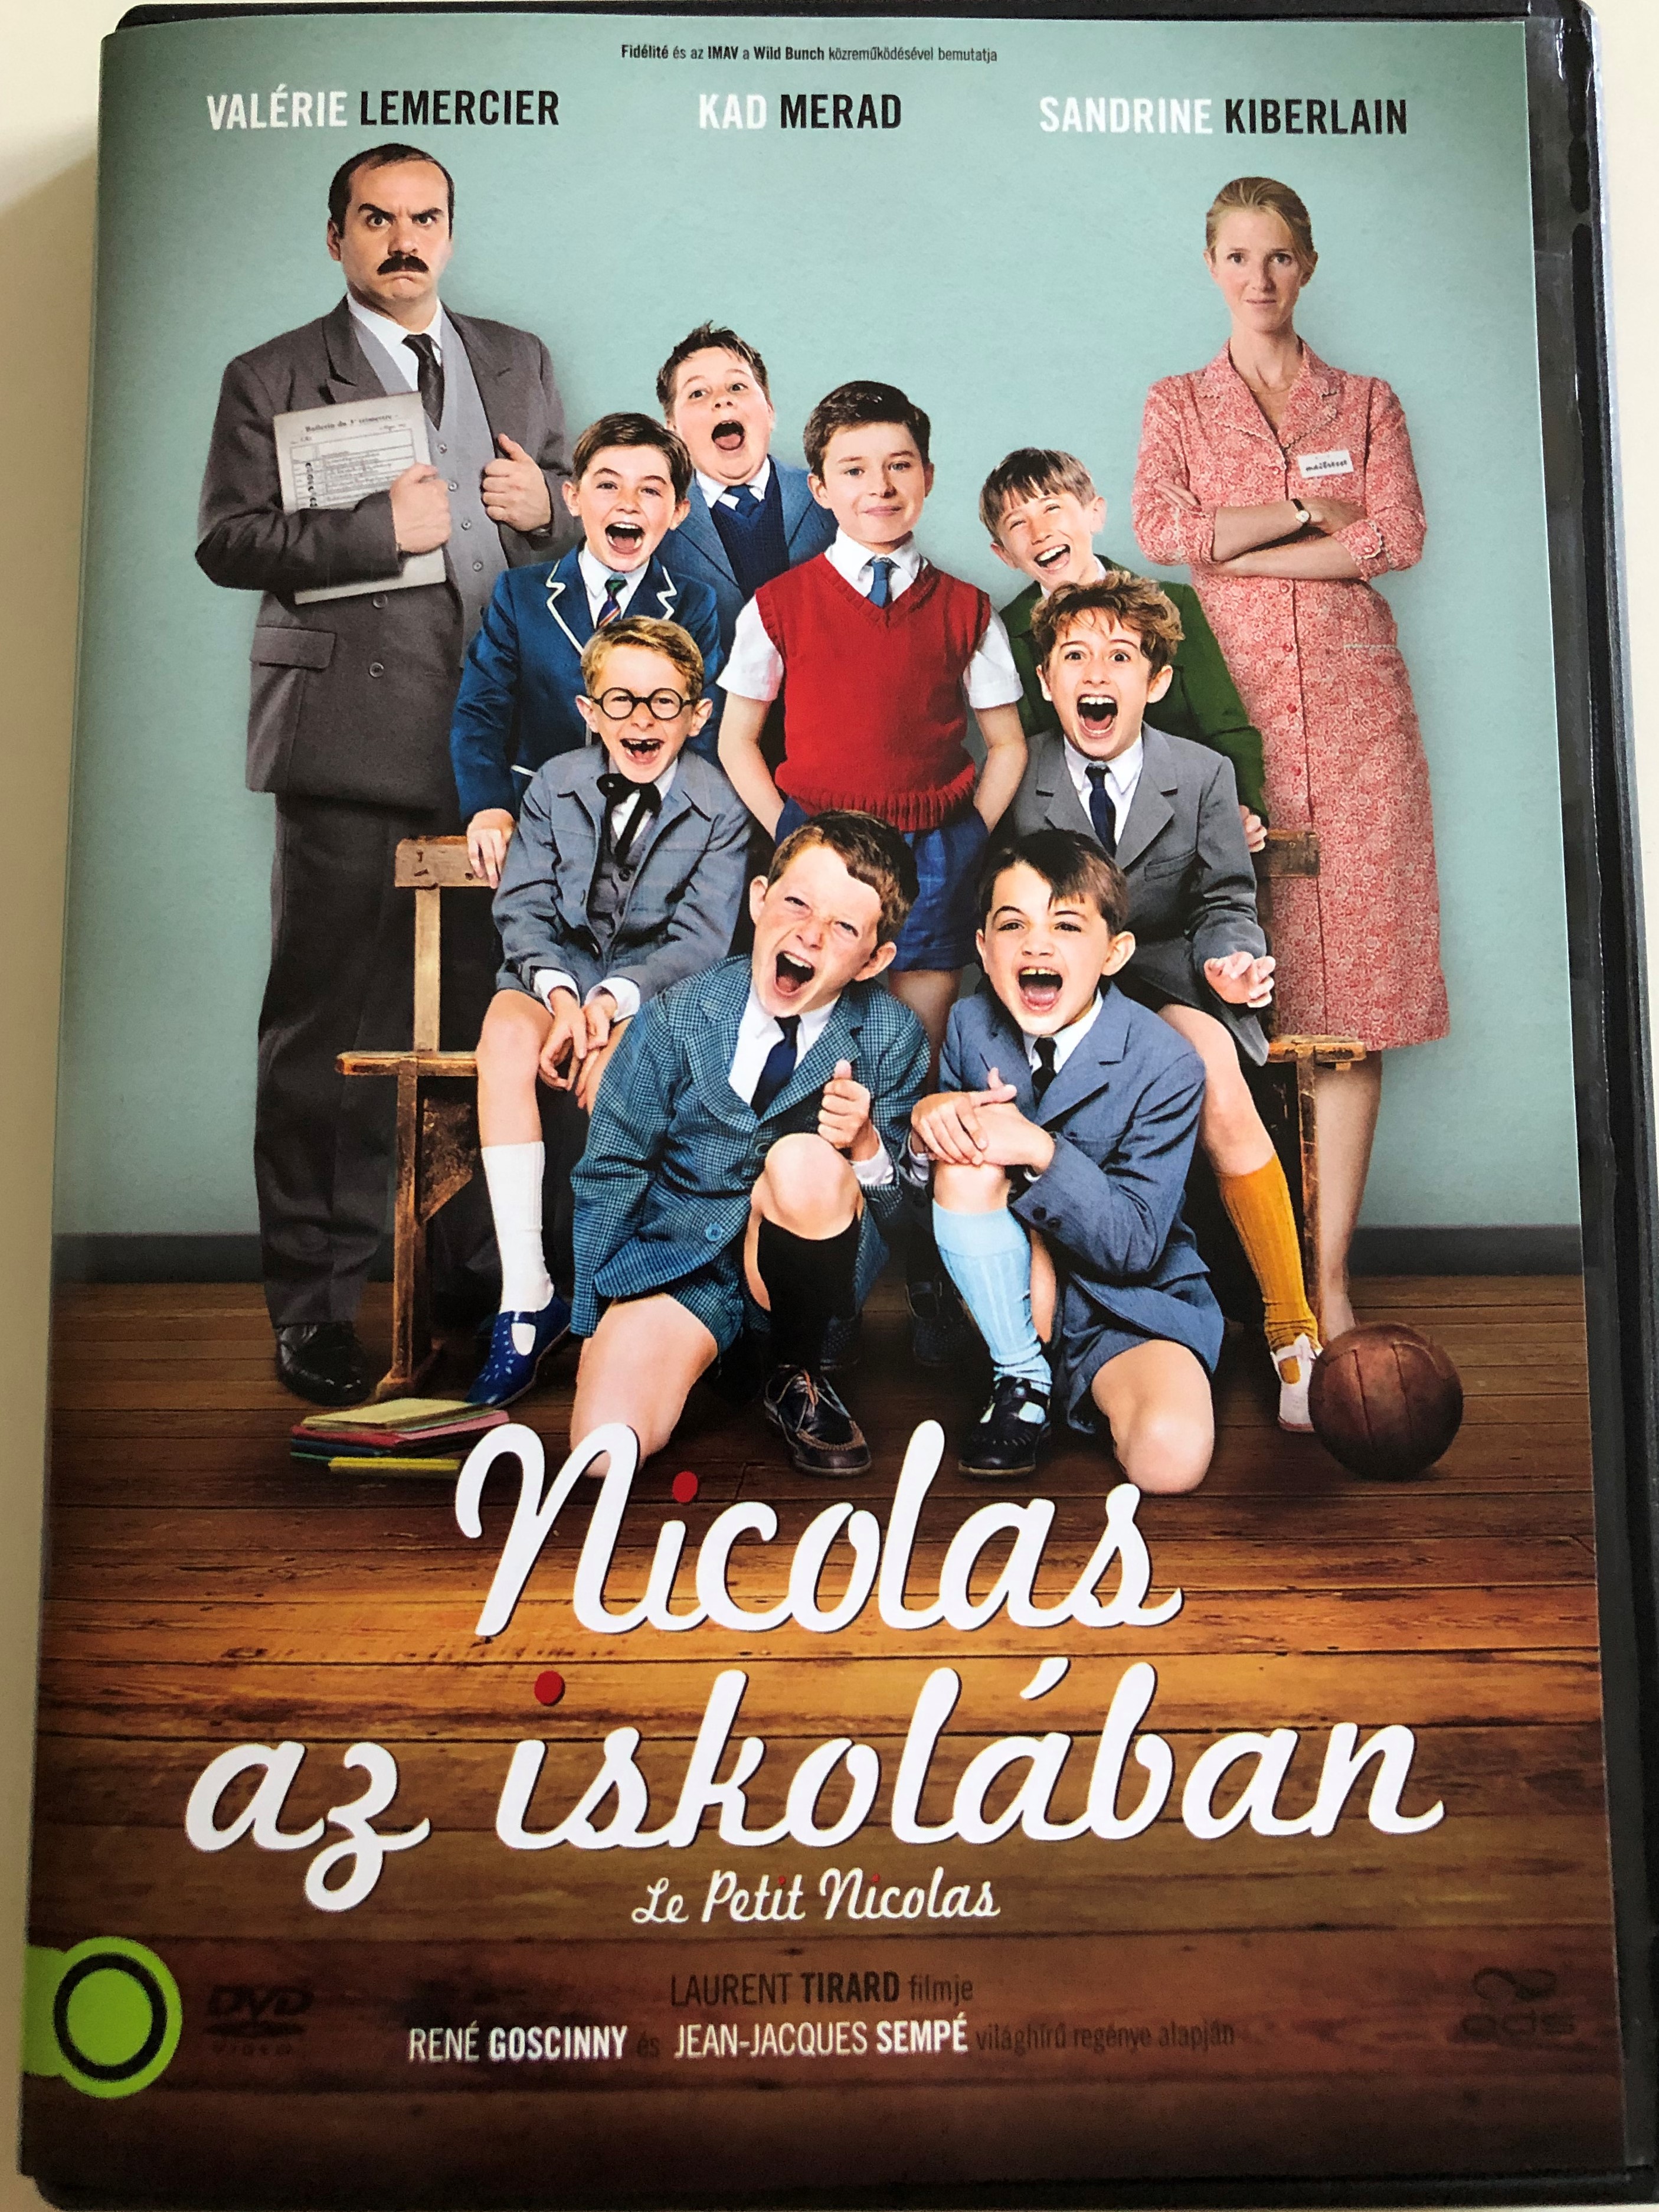 Le Petit Nicolas DVD 2009 Nicolas az iskolában / Directed by Laurent Tirard  / Starring: Maxime Godart, Kad Merad, Valérie Lemercier - bibleinmylanguage